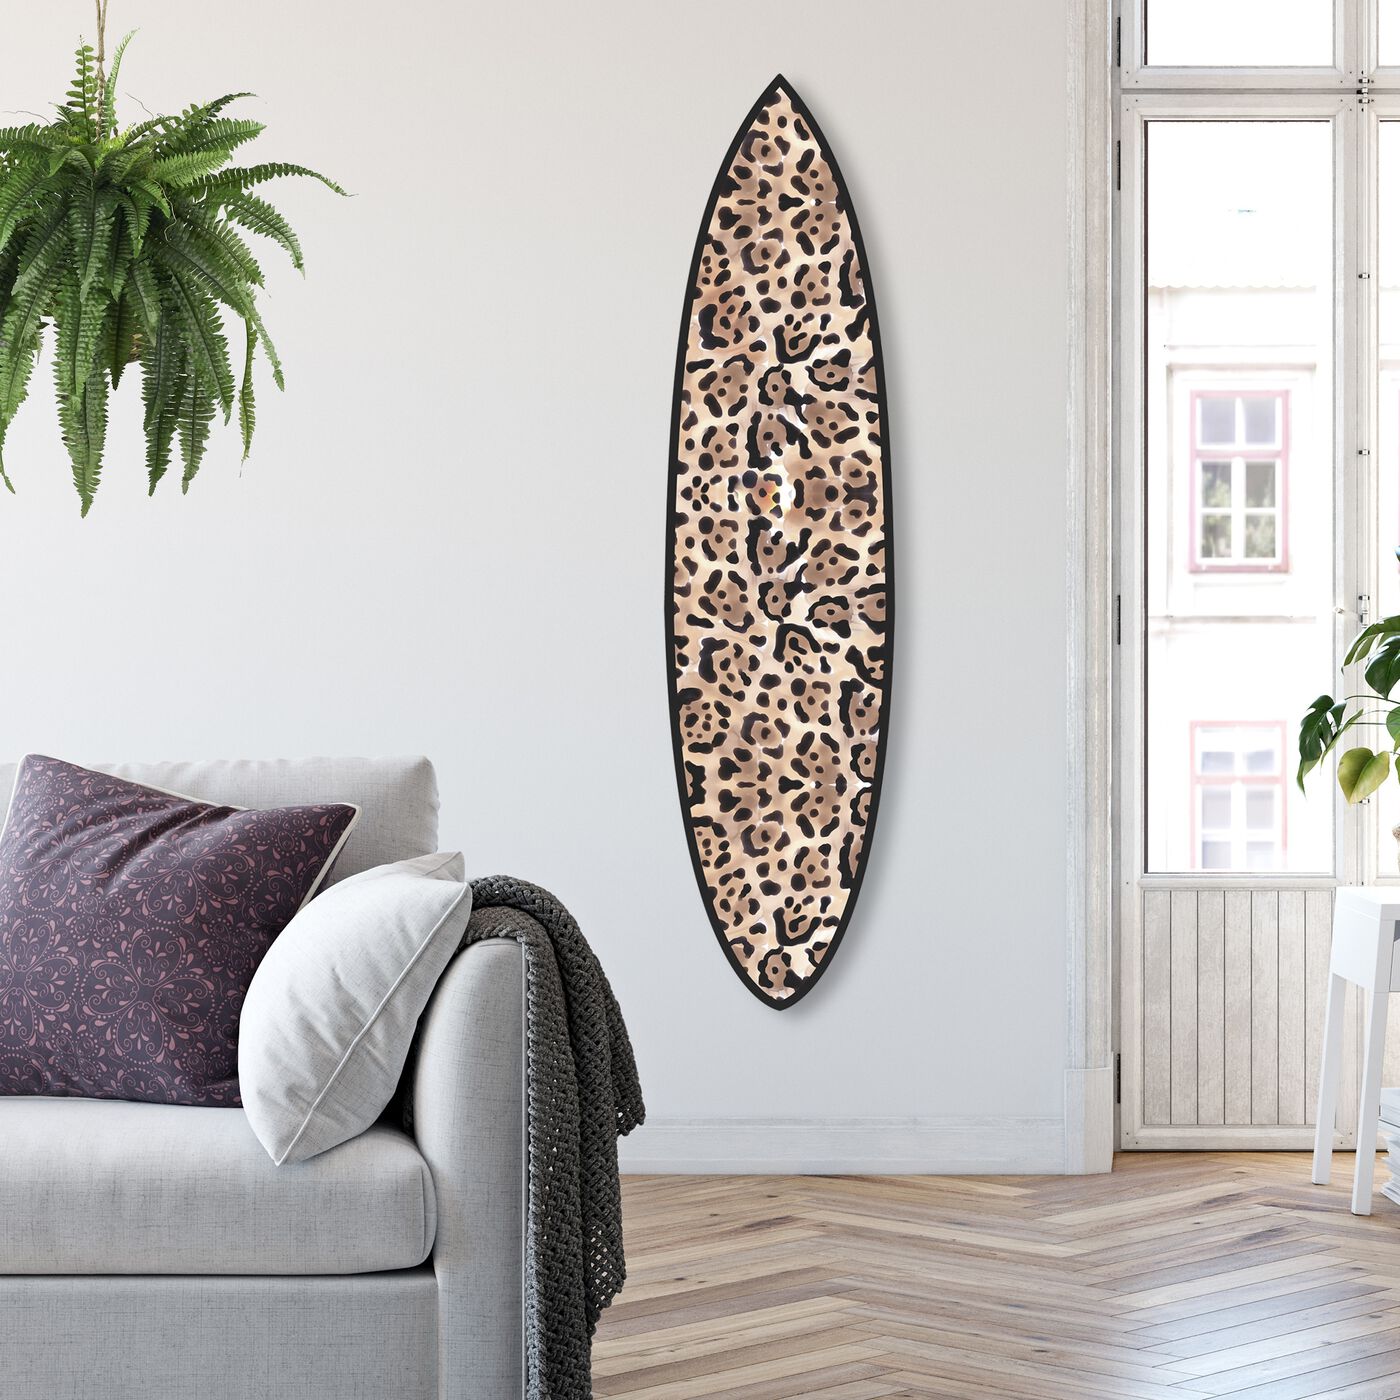 Cheetah Surfboard